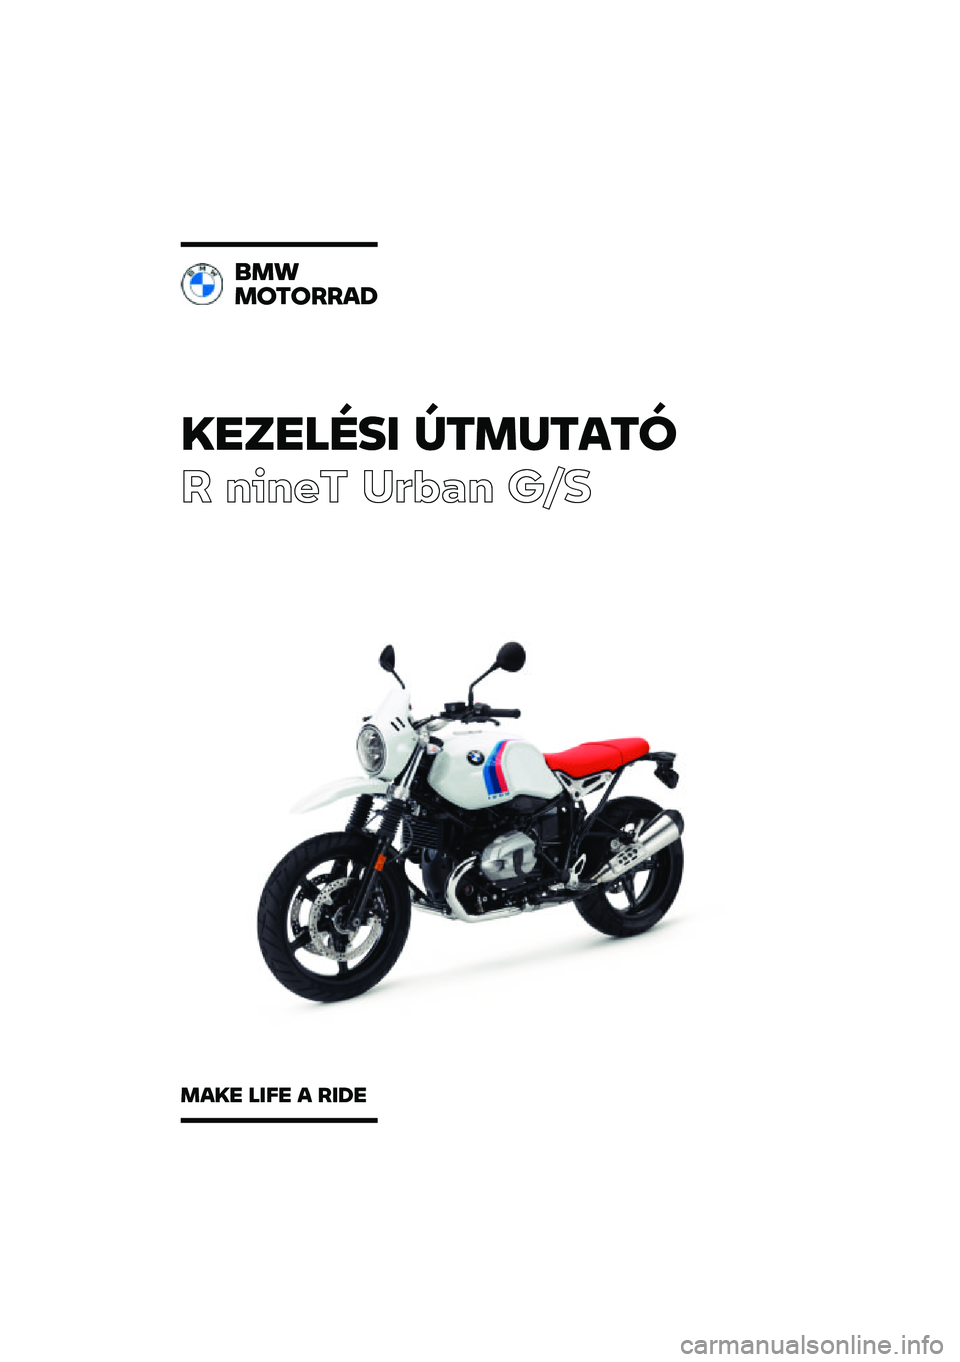 BMW MOTORRAD R NINE T URVAN G/S 2021  Kezelési útmutató (in Hungarian) �������\b�	 �
�\f�
��\f��\f�
� ����� ��\b�	�
� ��\f�
��
�
�
��\f�����
�
��� ��	�� � ��	�� 